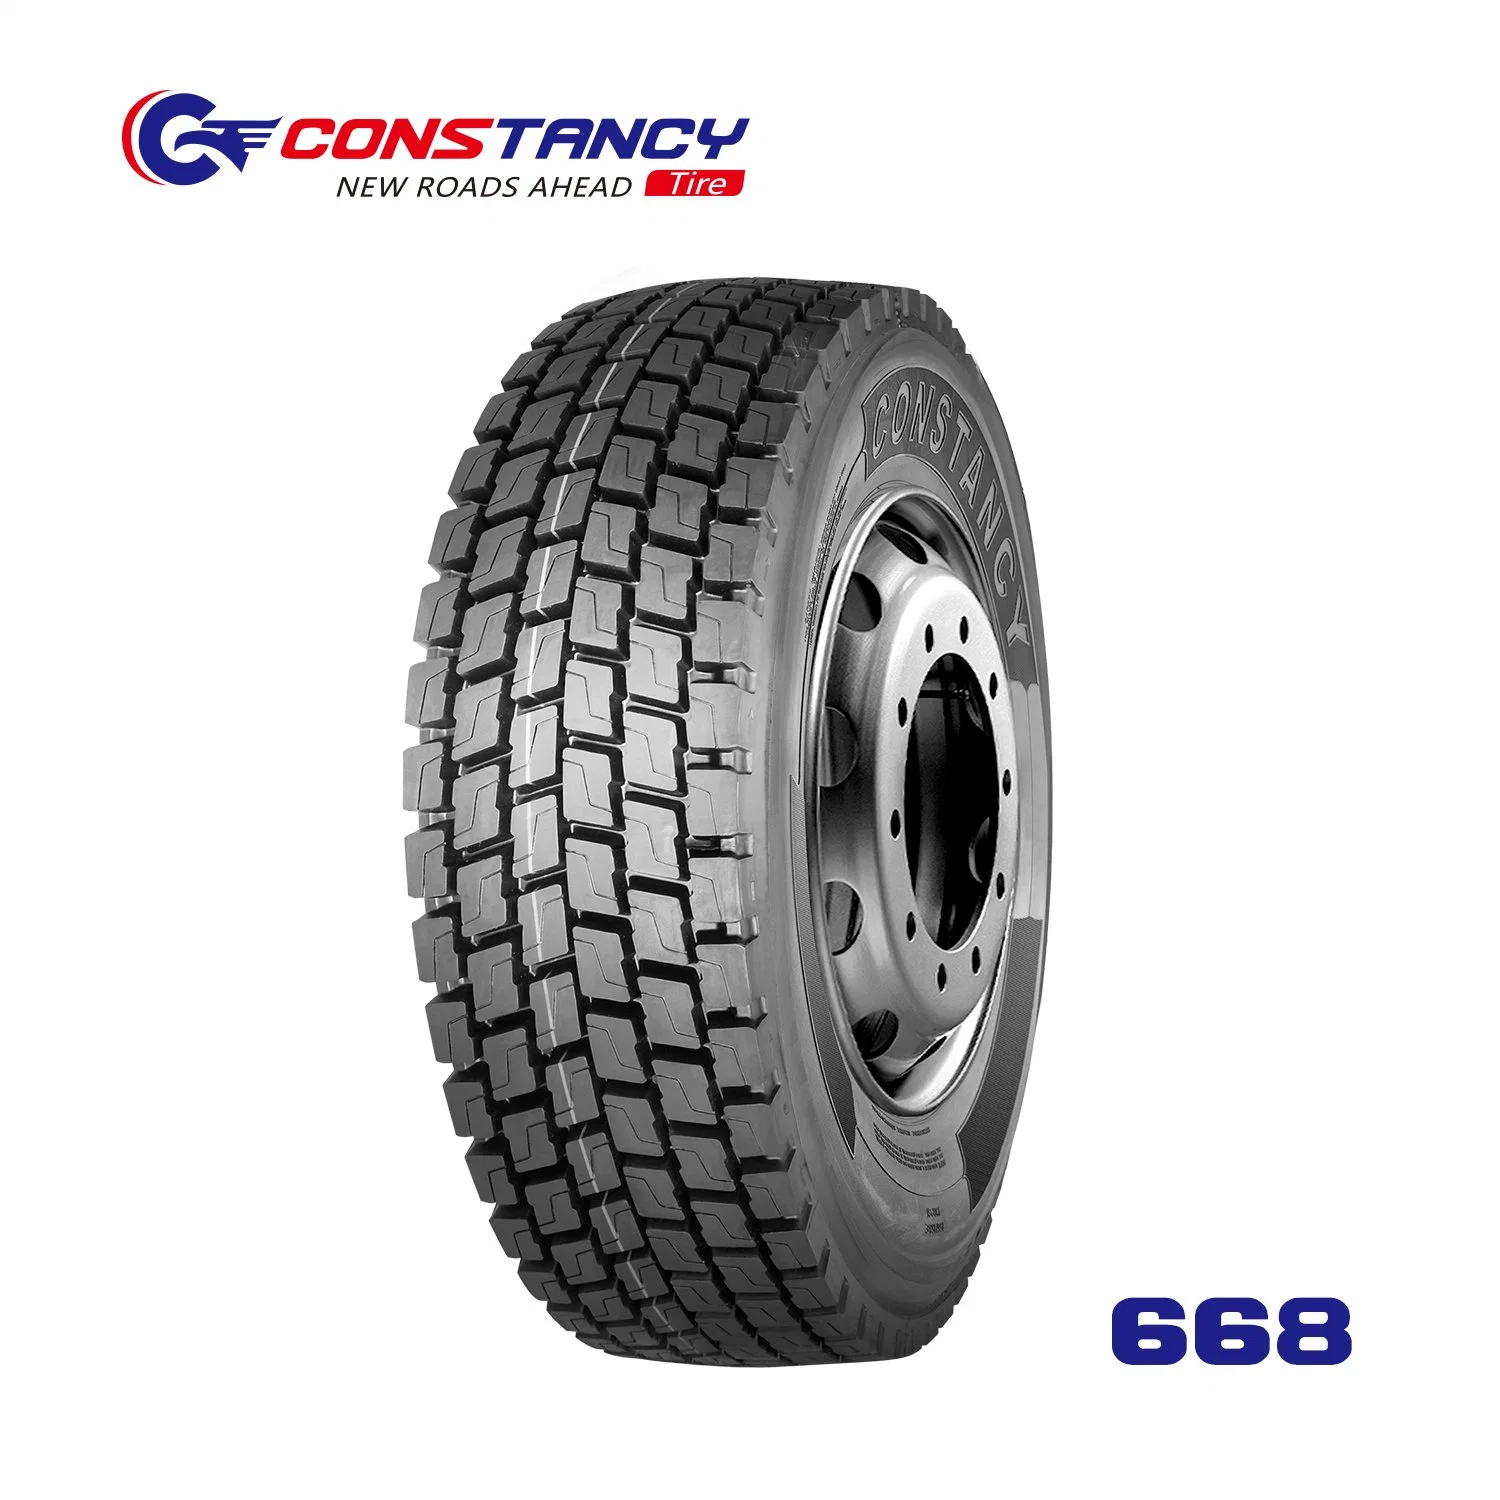 Constancy Truck Bus Tyre, TBR, Light Truck Tyre, Block Drive 668 (295/80R22.5, 315/80R22.5, 11R22.5, 12R22.5)